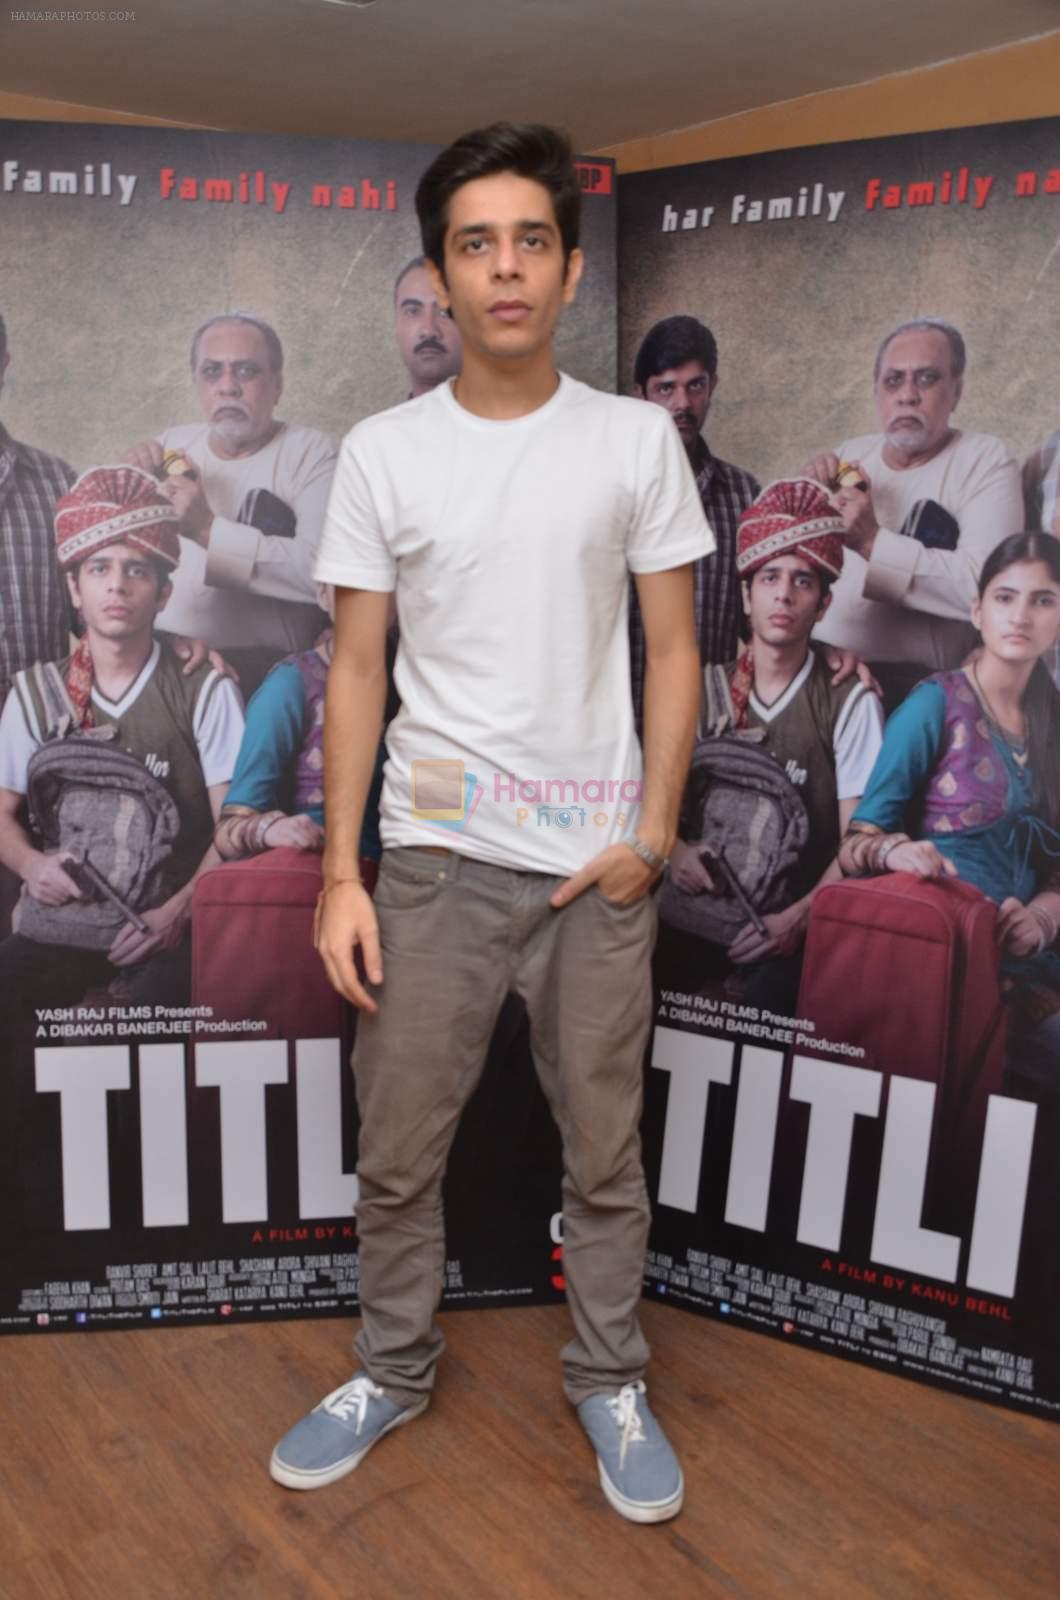 Shashank Arora at Titli film iterviews in Yashraj on 13th Oct 2015